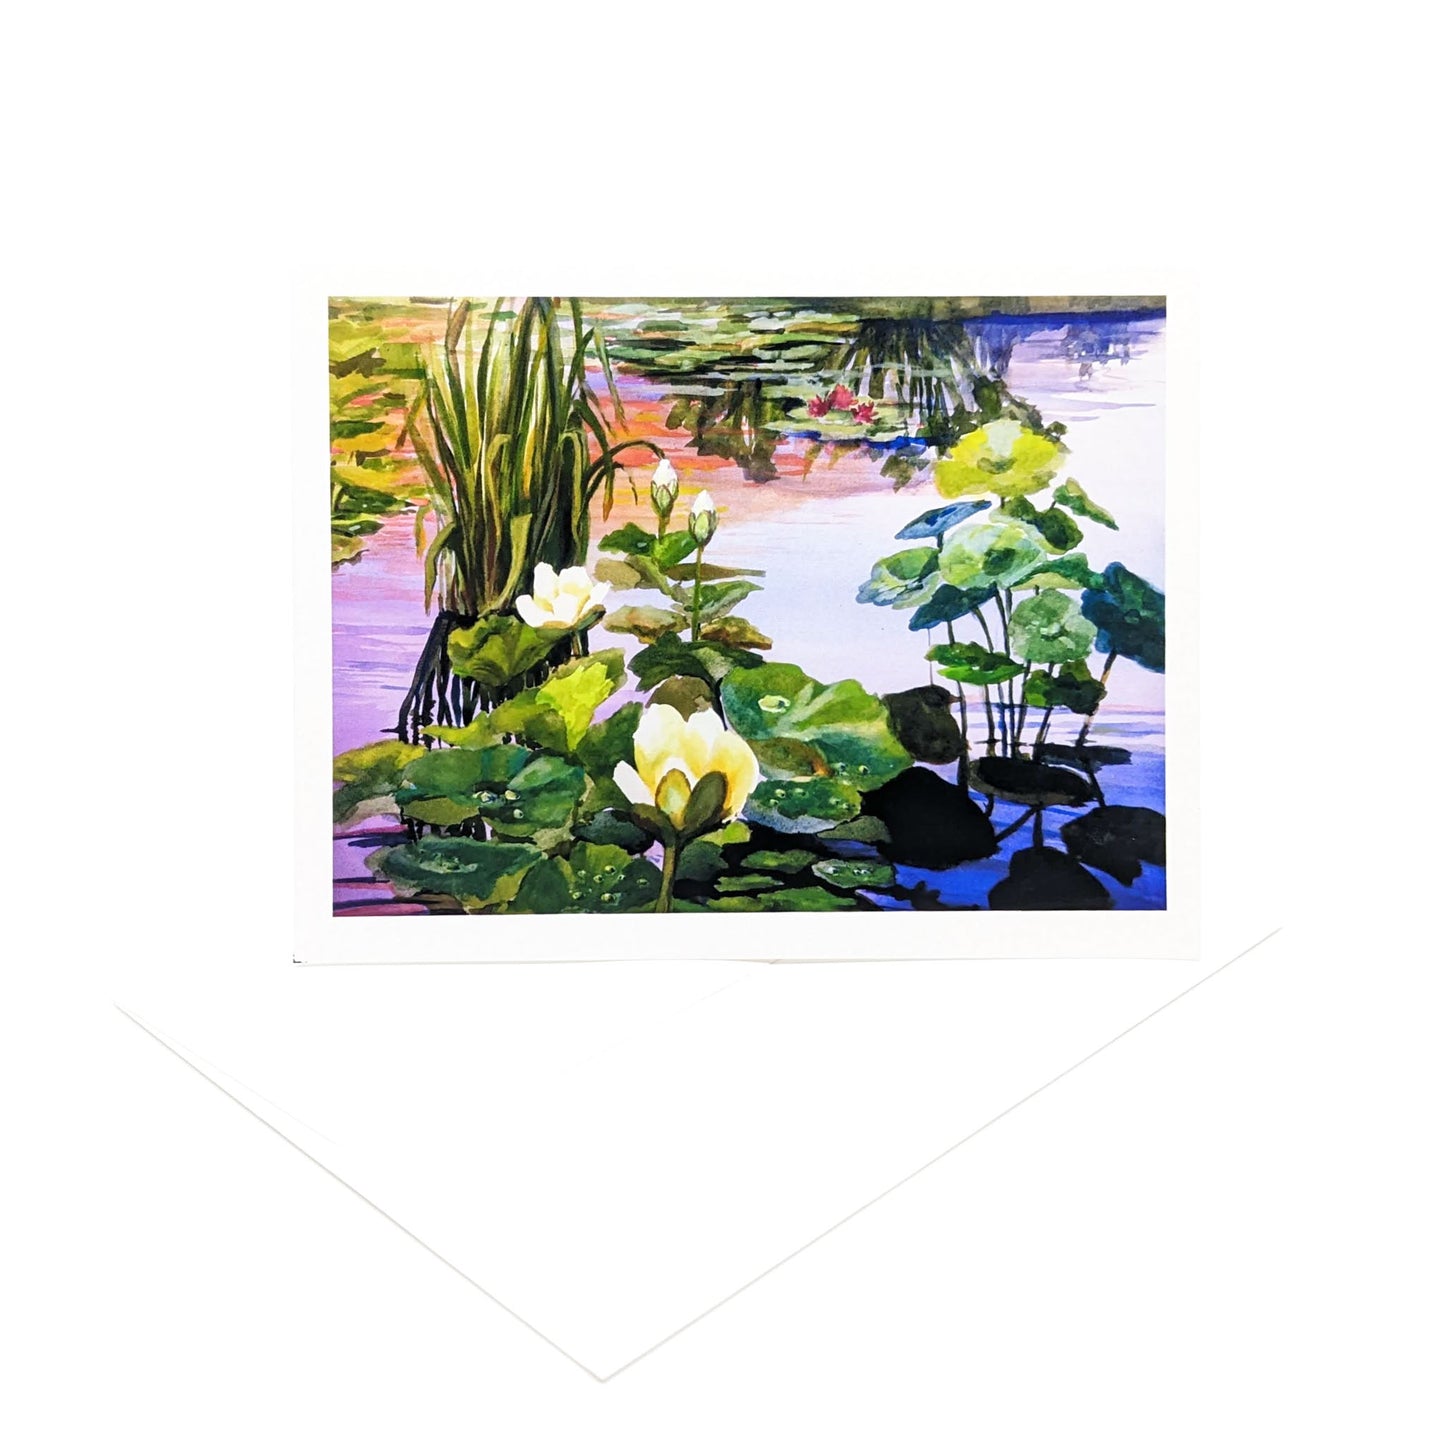 Lotus Pond Reflections- Greeting Card